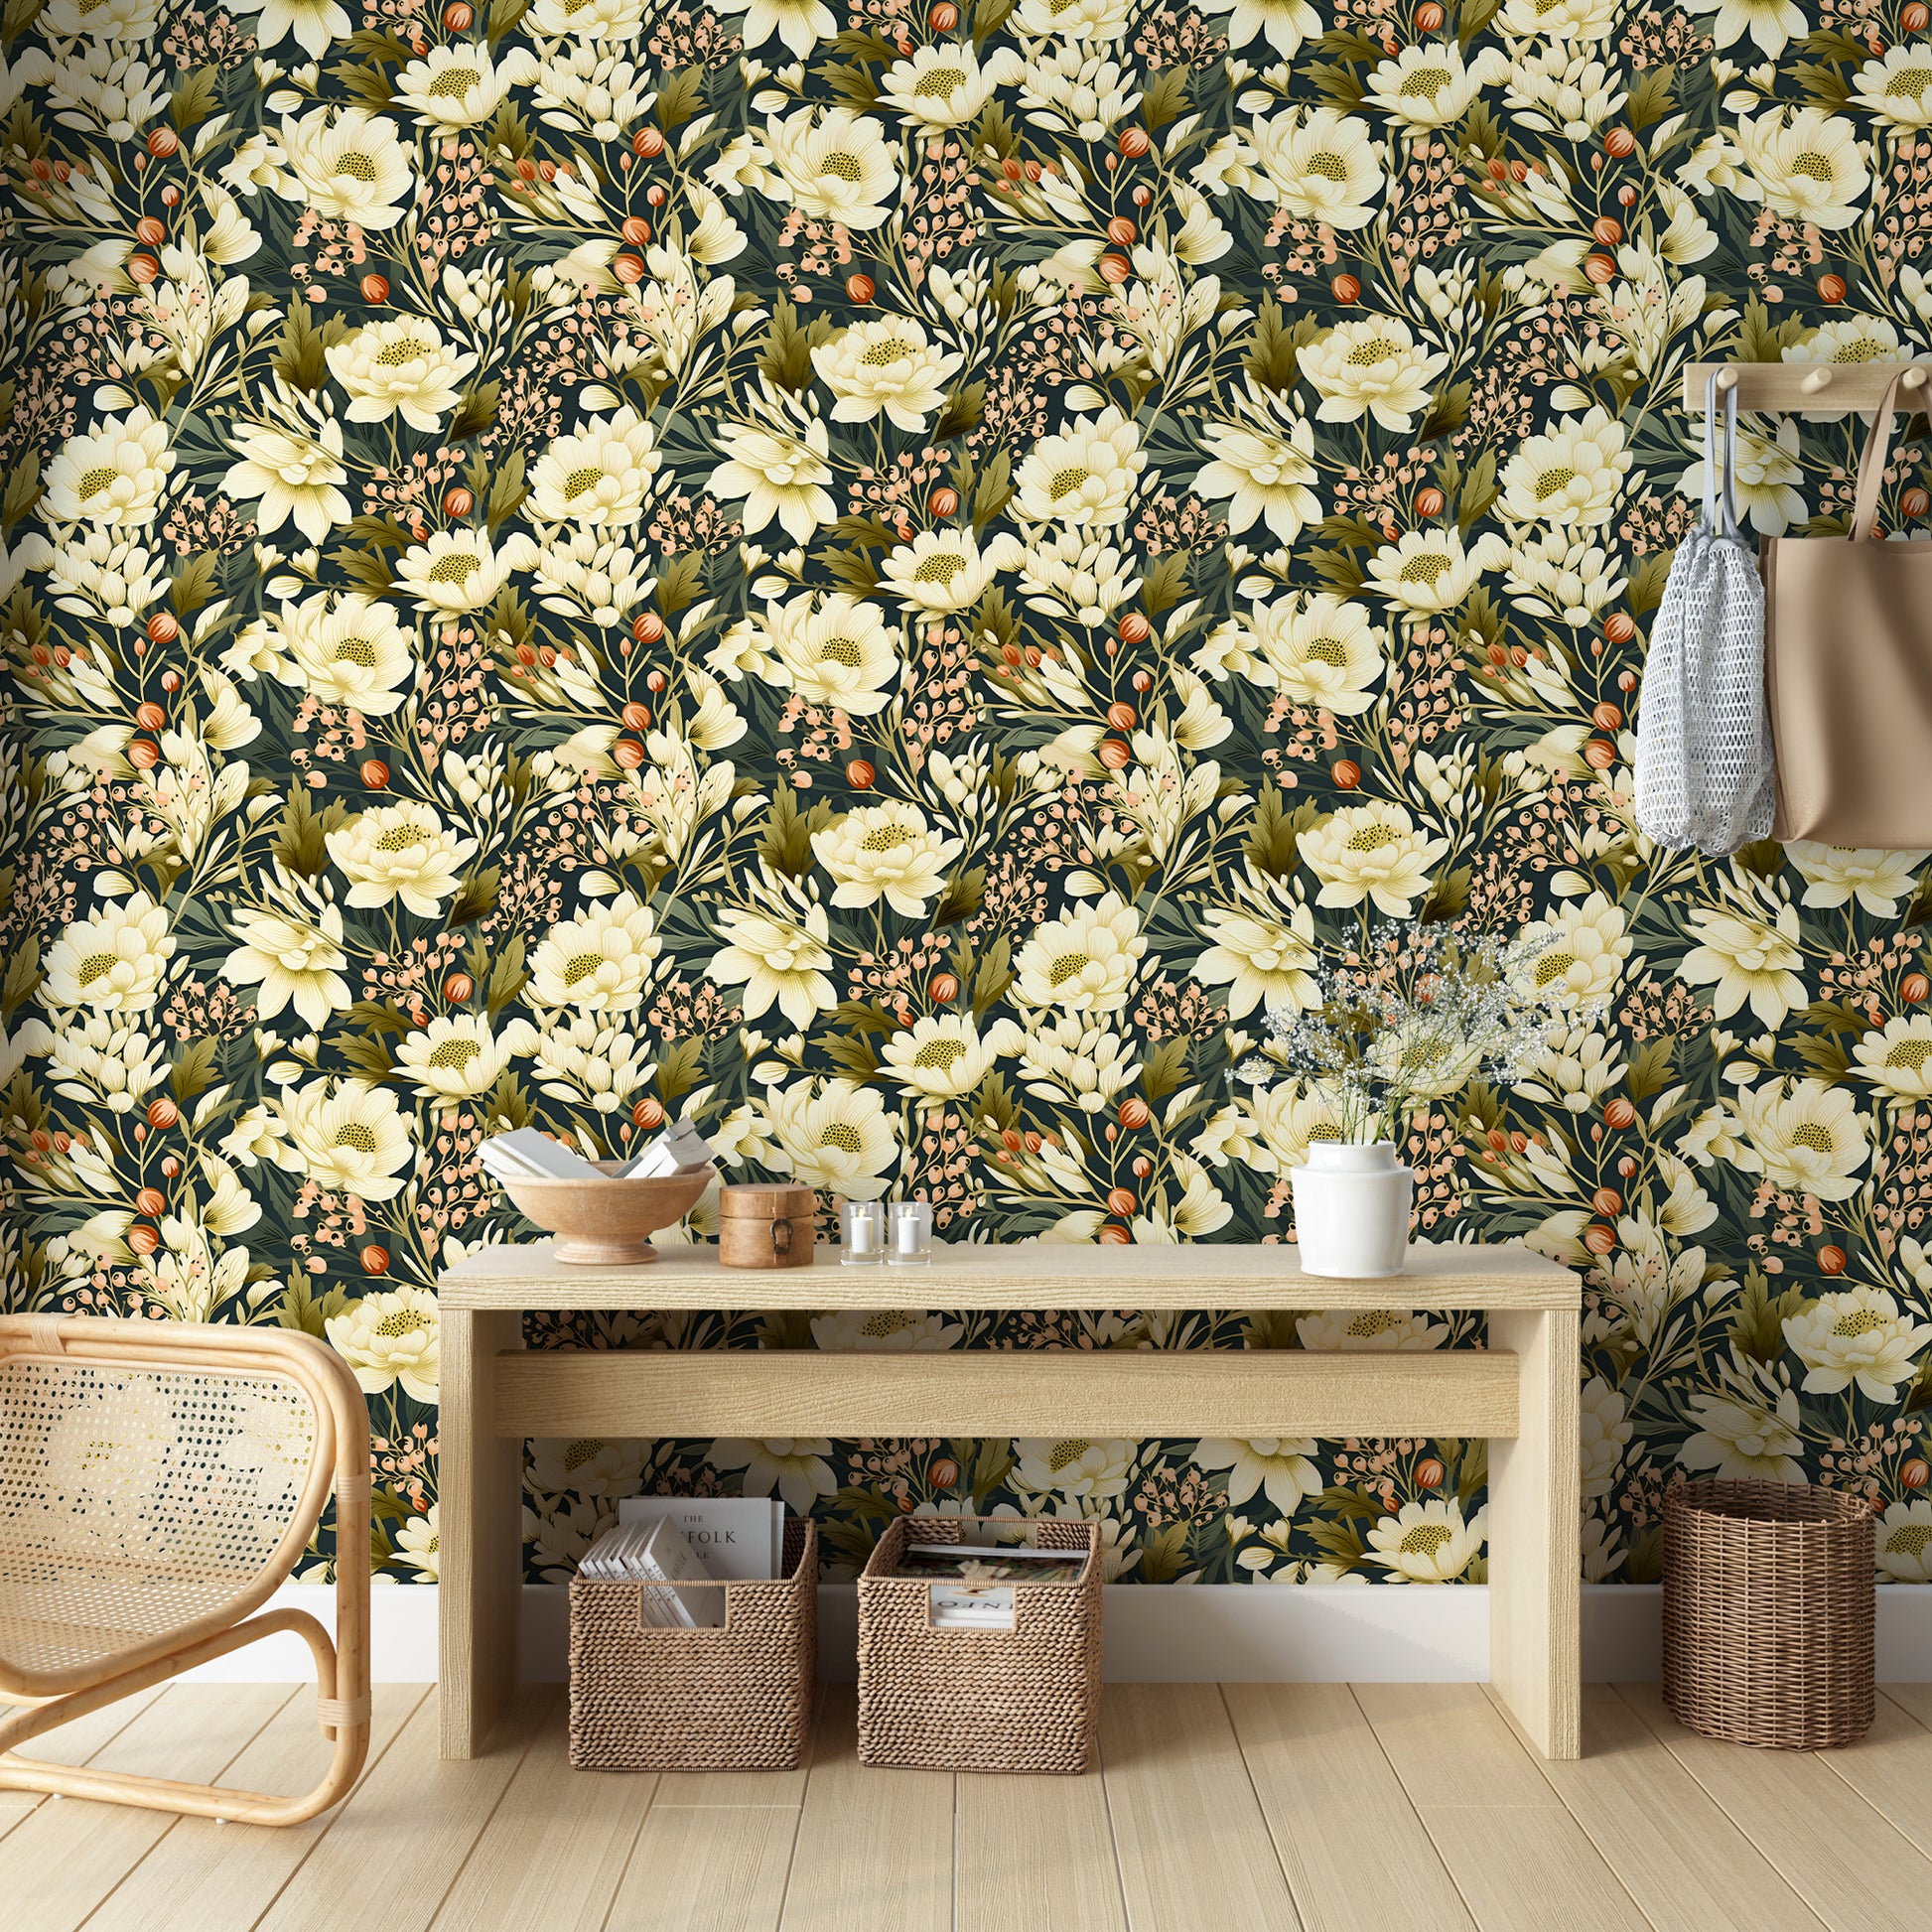  Dark Floral Pattern Removable Wallpaper